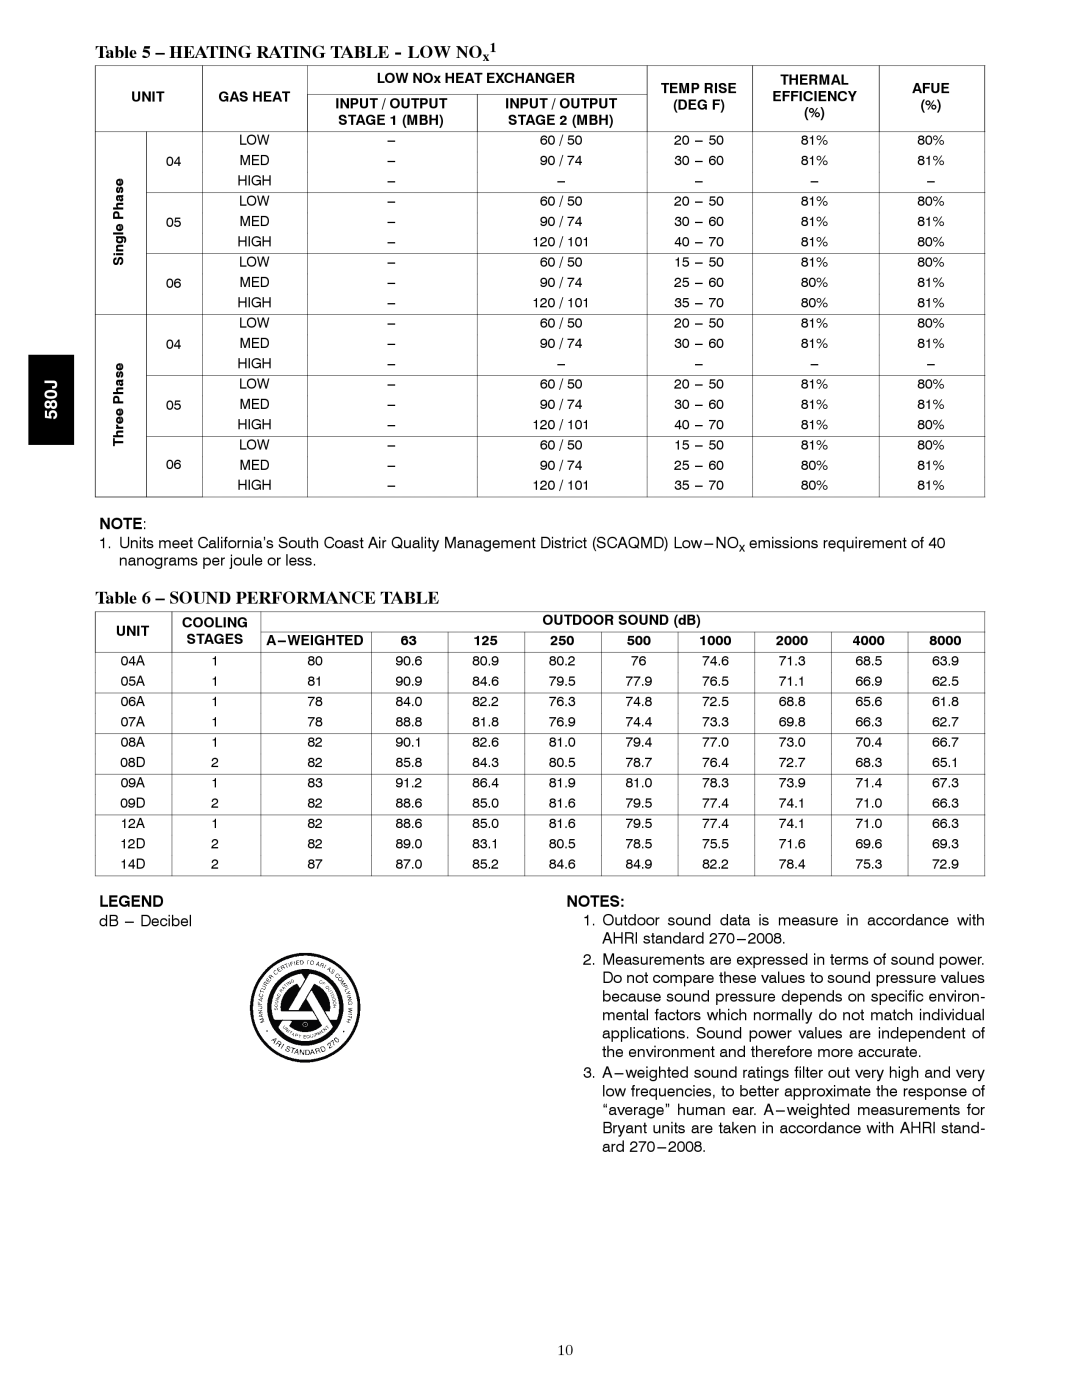 Bryant 580J manual HEATING RATING TABLE - LOW NOx1, Sound Performance Table, dB ---Decibel, AHRI standard 